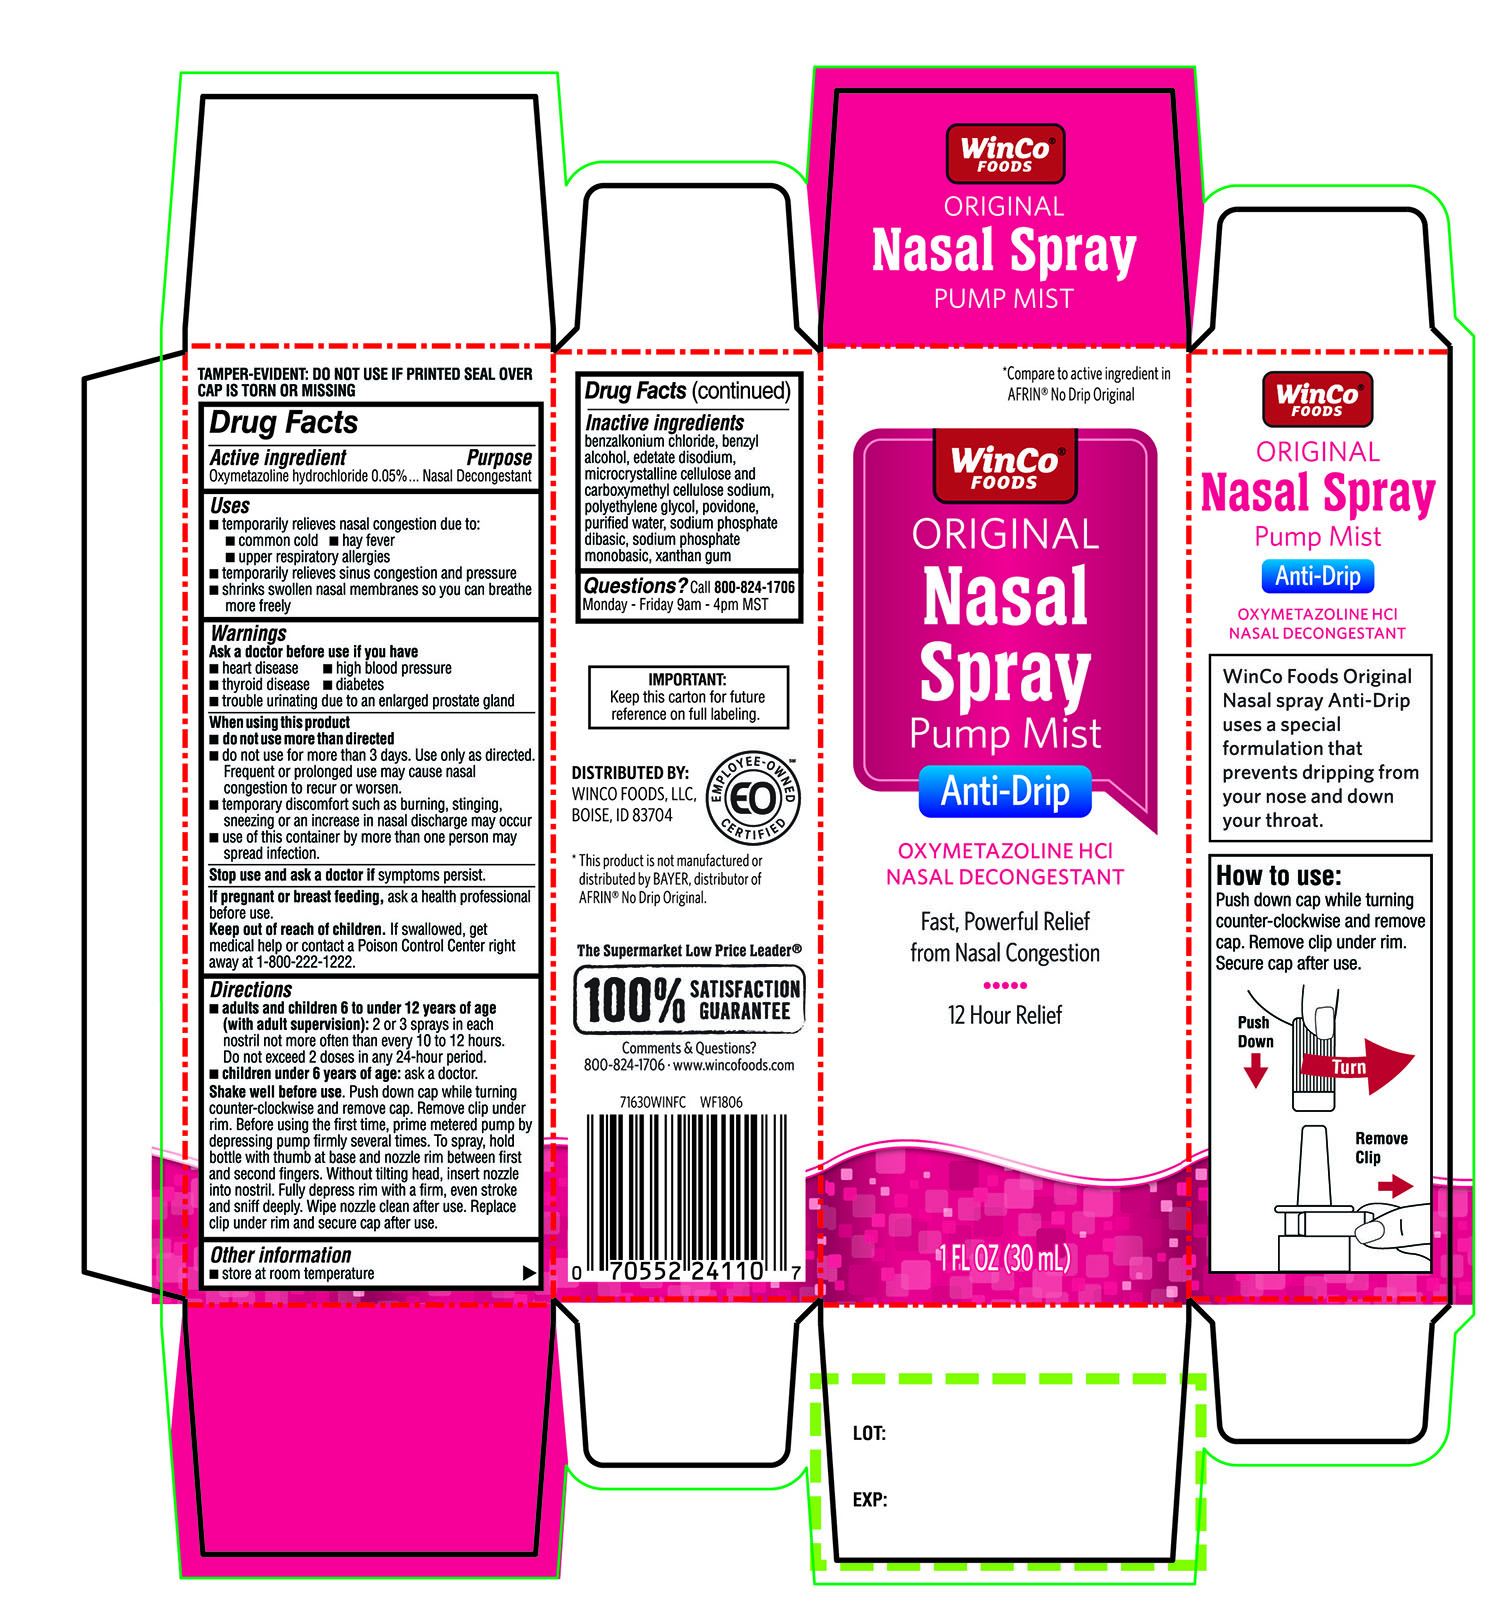 WinCo FOODS ORIGINAL Nasal Spray Pump Mist Anti-Drip  Oxymetazoline HCl  Nasal Decongestant 1 FL OZ (30 mL)